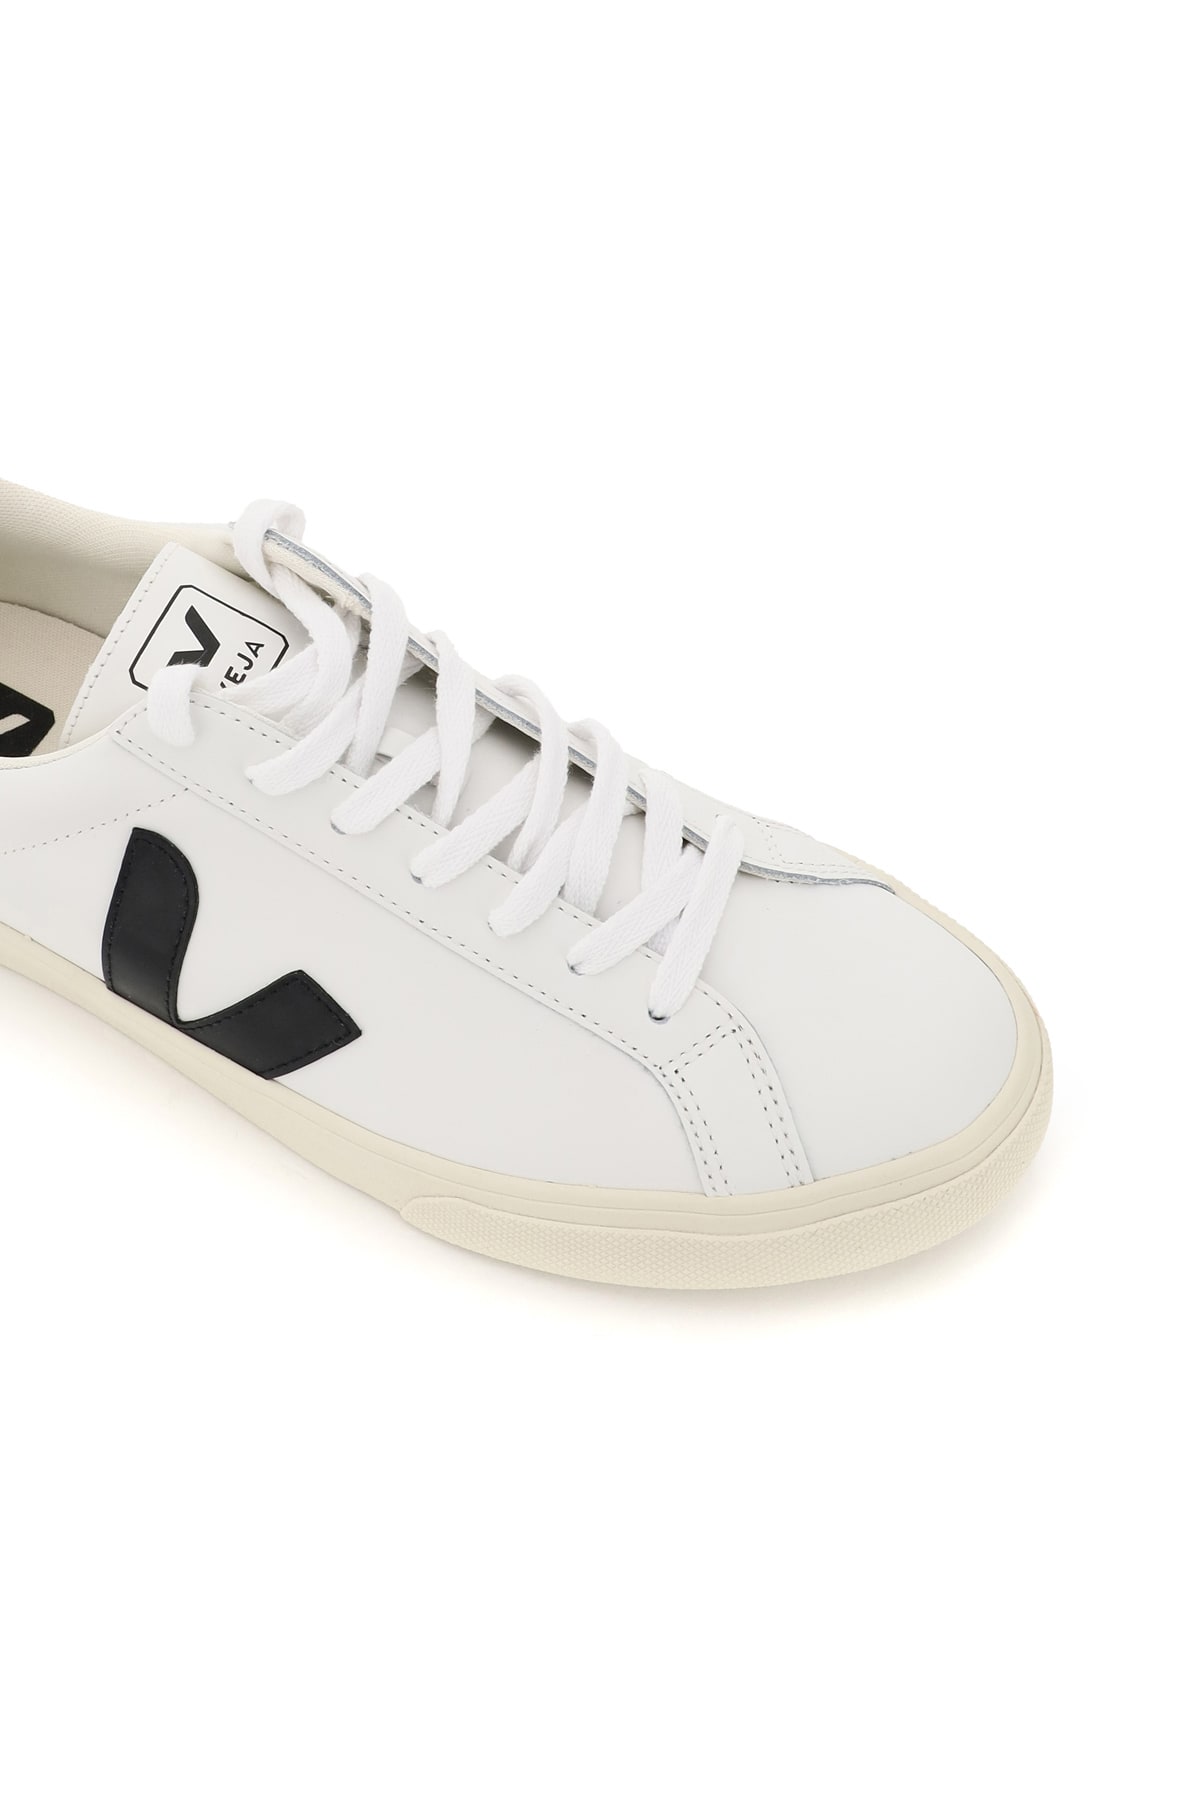 Shop Veja Esplar Leather Sneakers In Extra White Black (white)